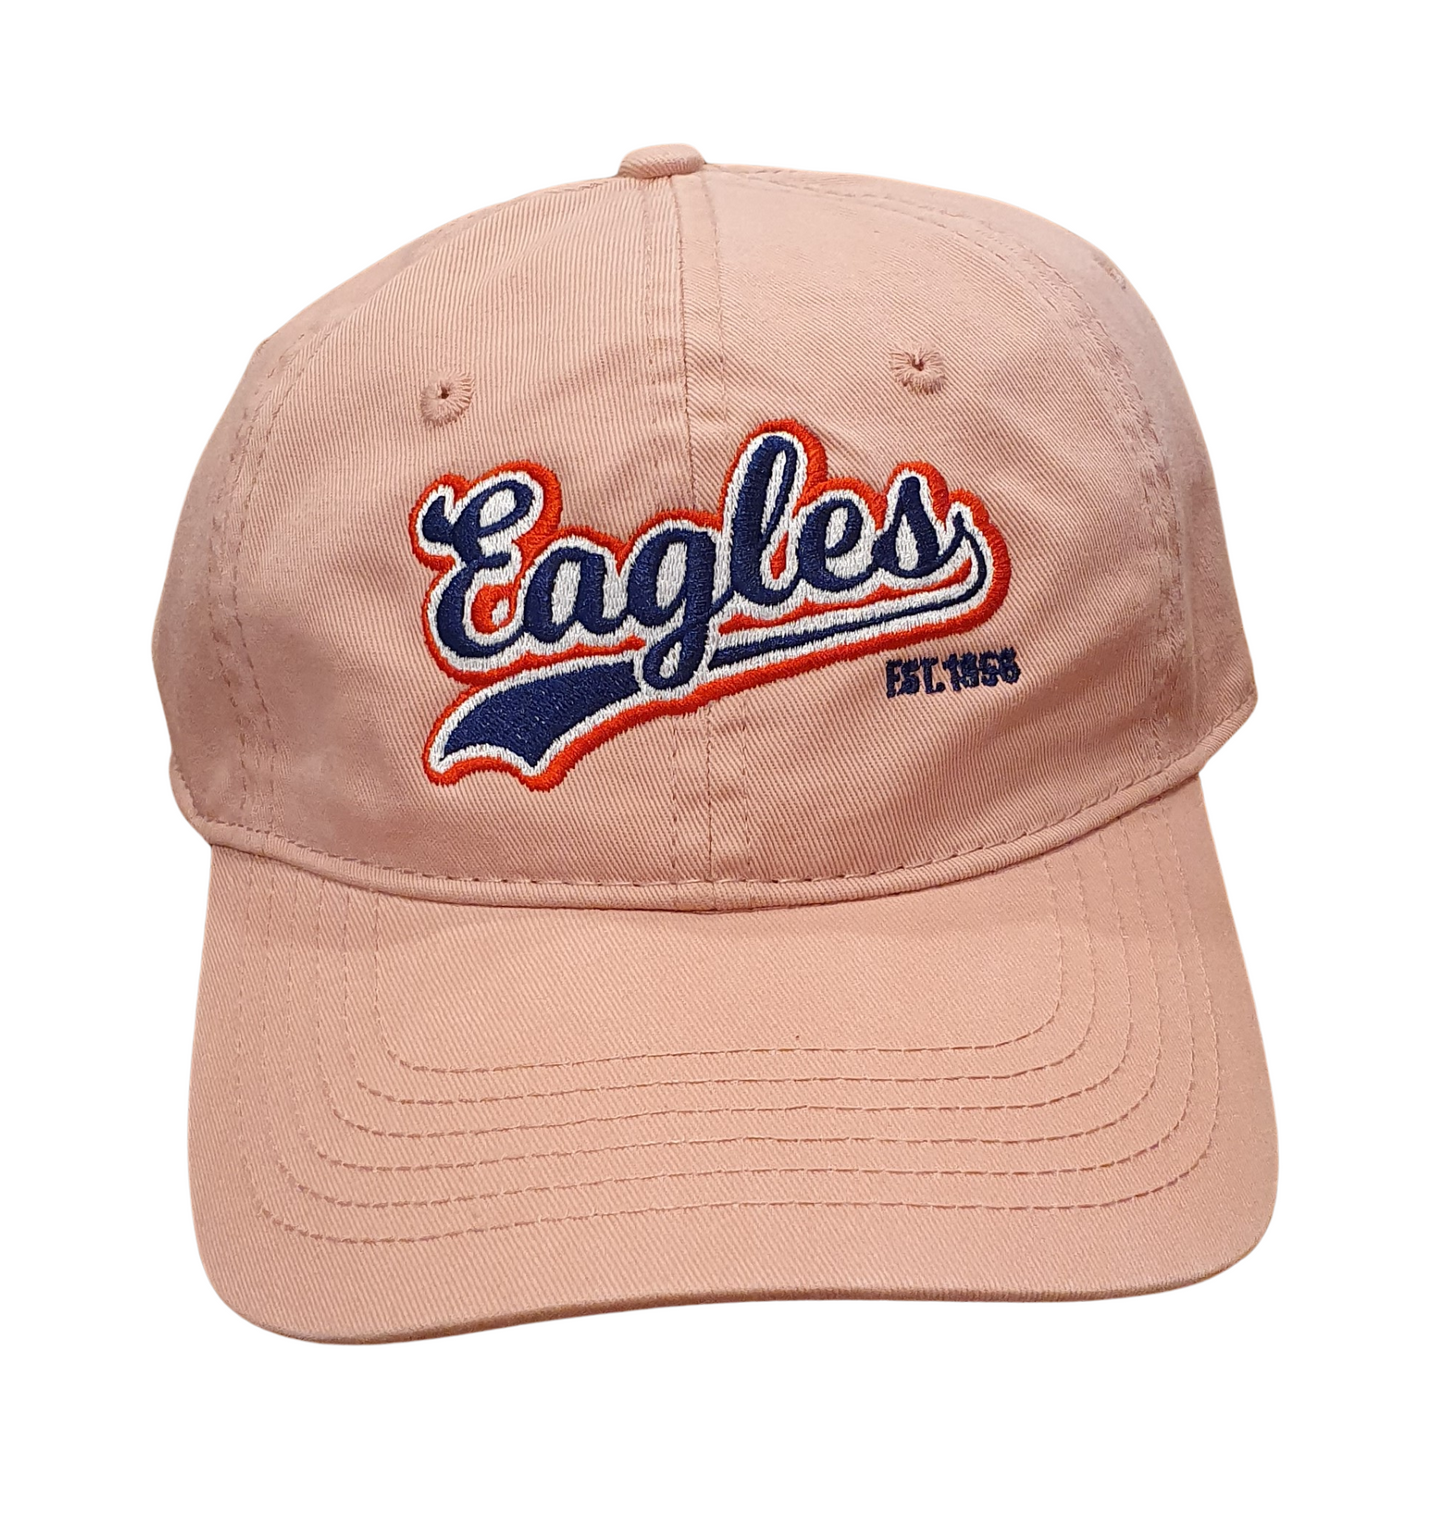 "Eagles" Unisex Cotton Low Profile Baseball Cap